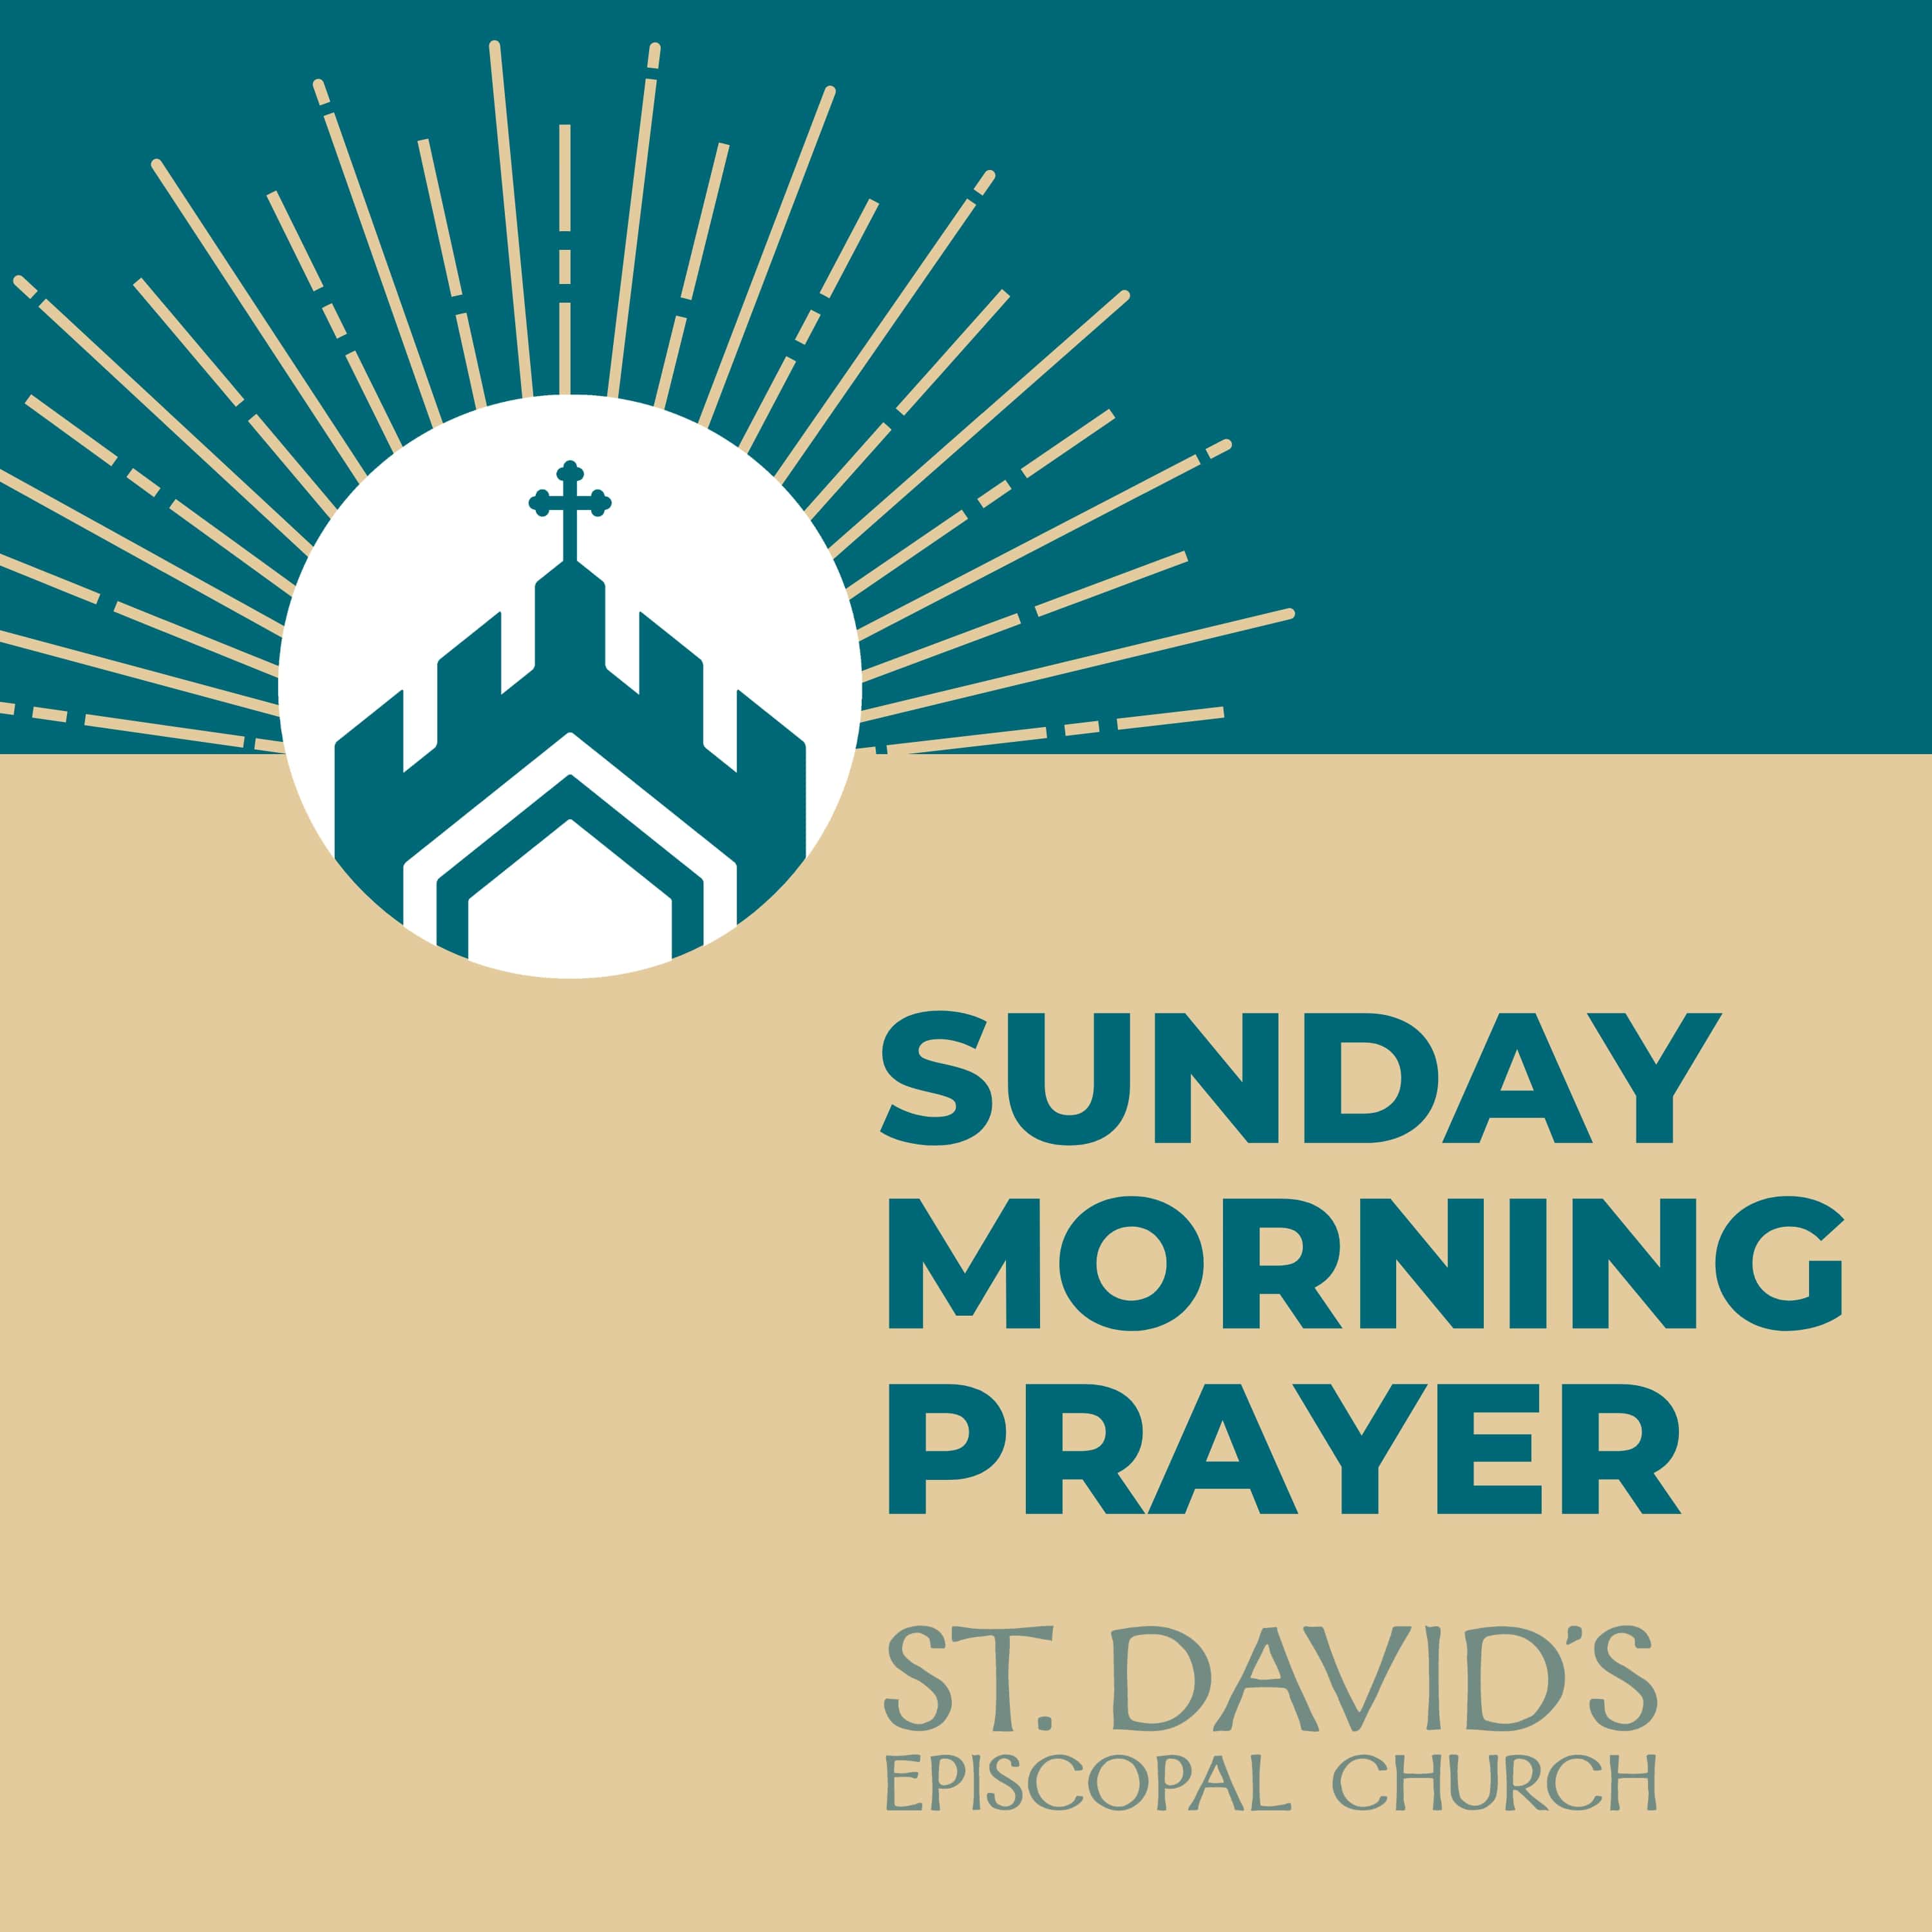 Sunday Morning Prayer: Rite Two, Year 2, Palm Sunday